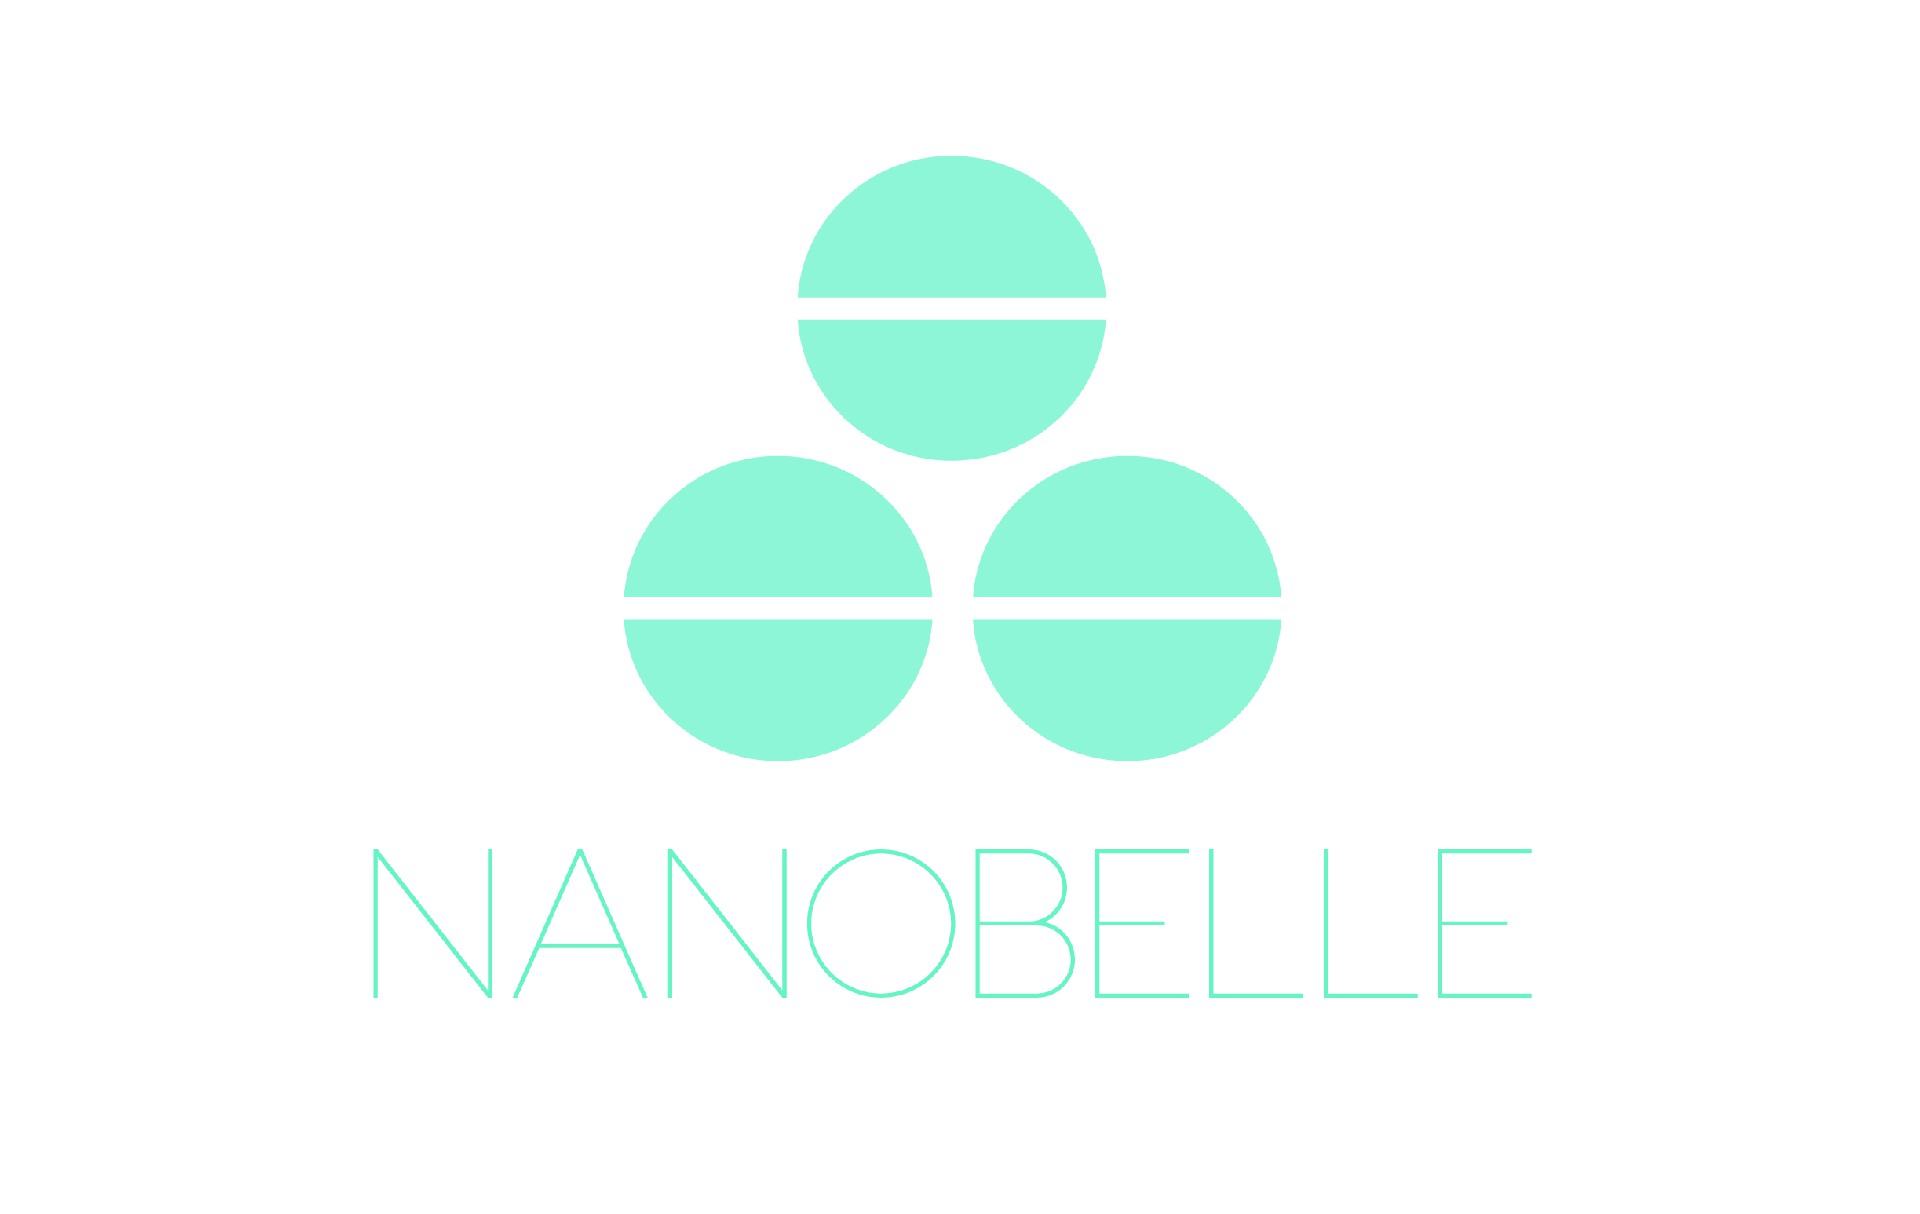 “Nanobelle” 商标启用申明